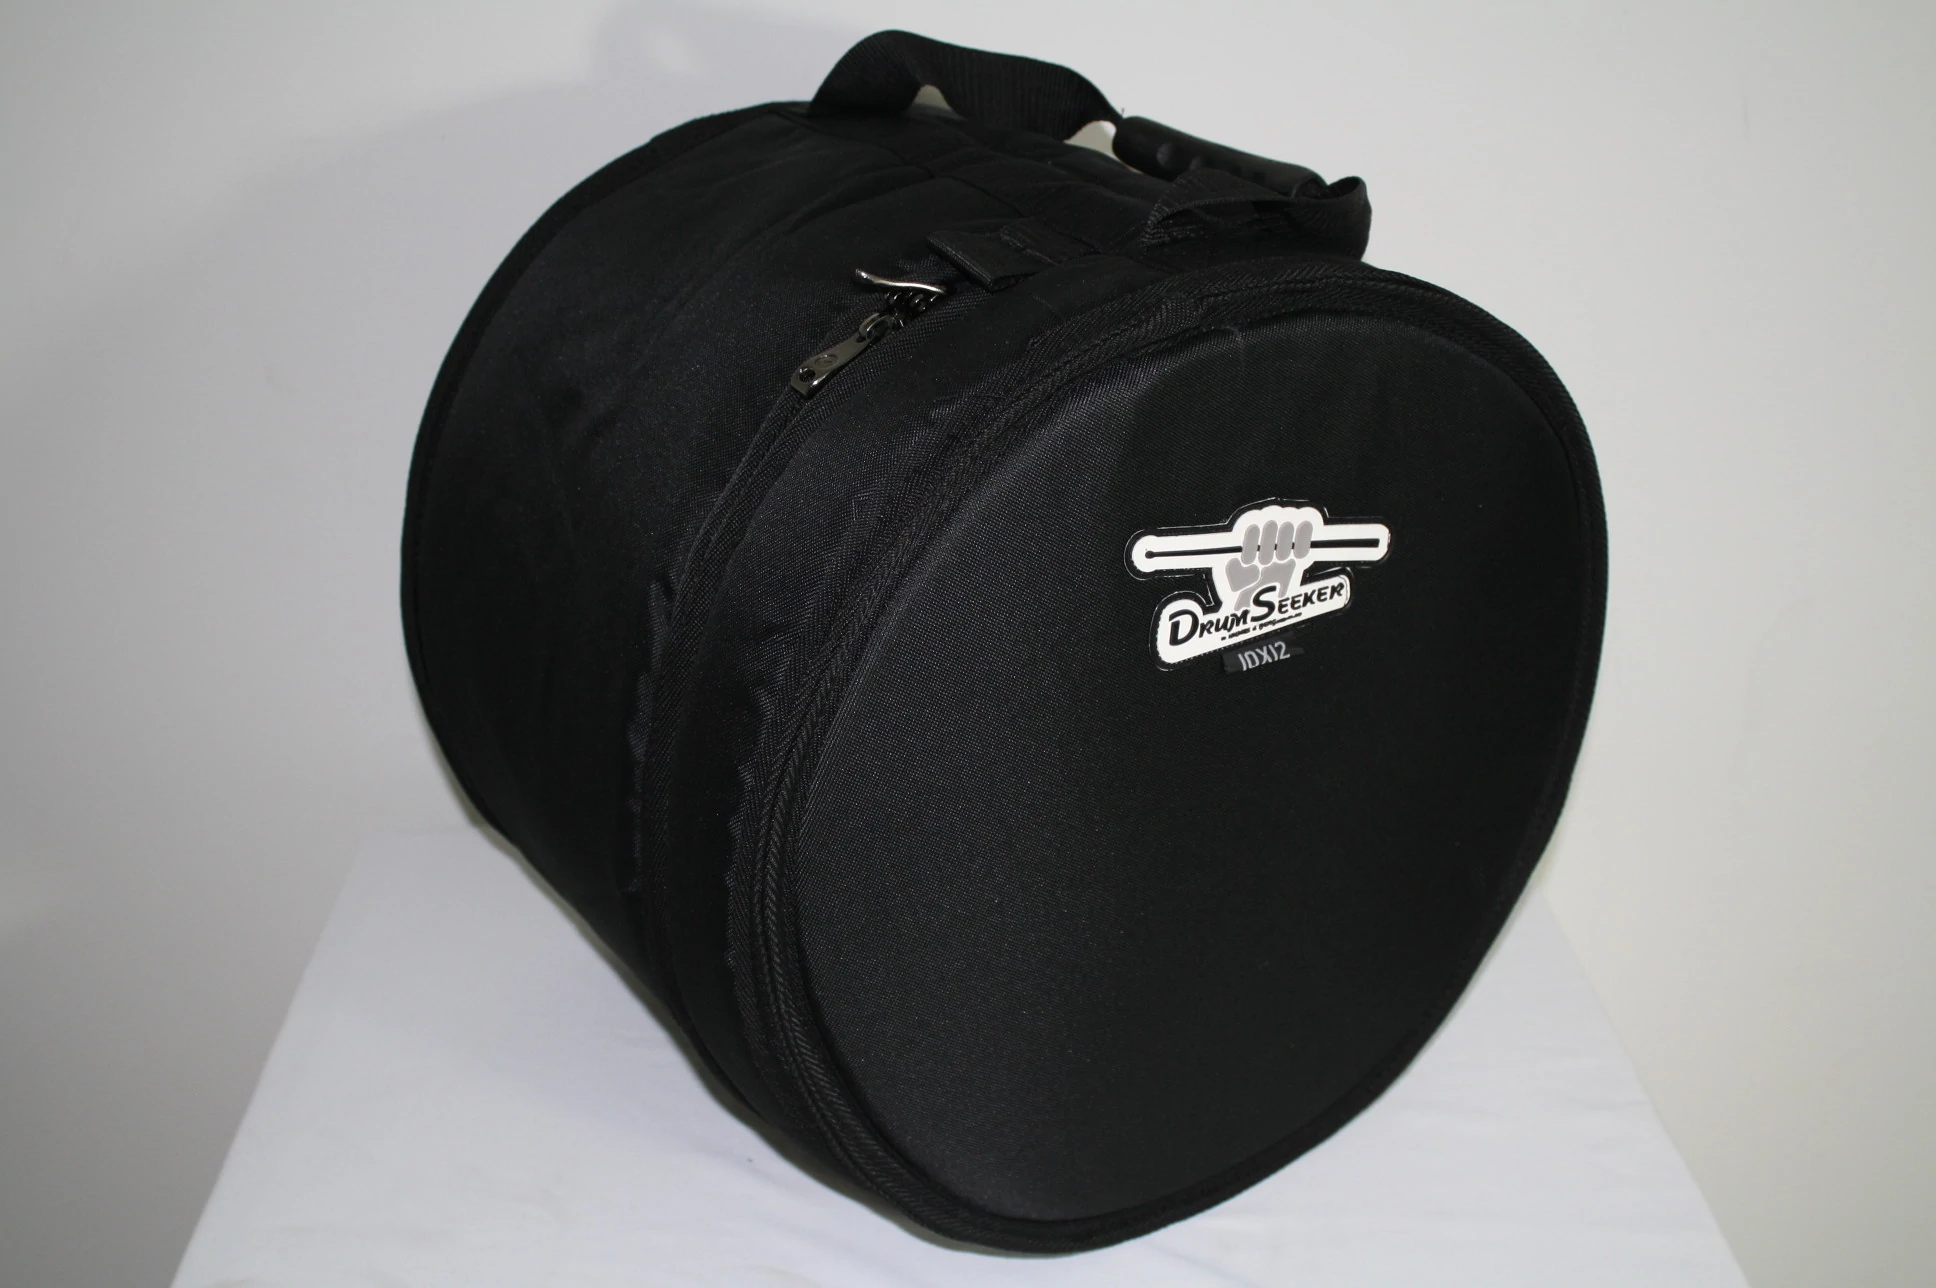 H&B Drum Seeker 8 x 10 Inches Tom Drum Bag